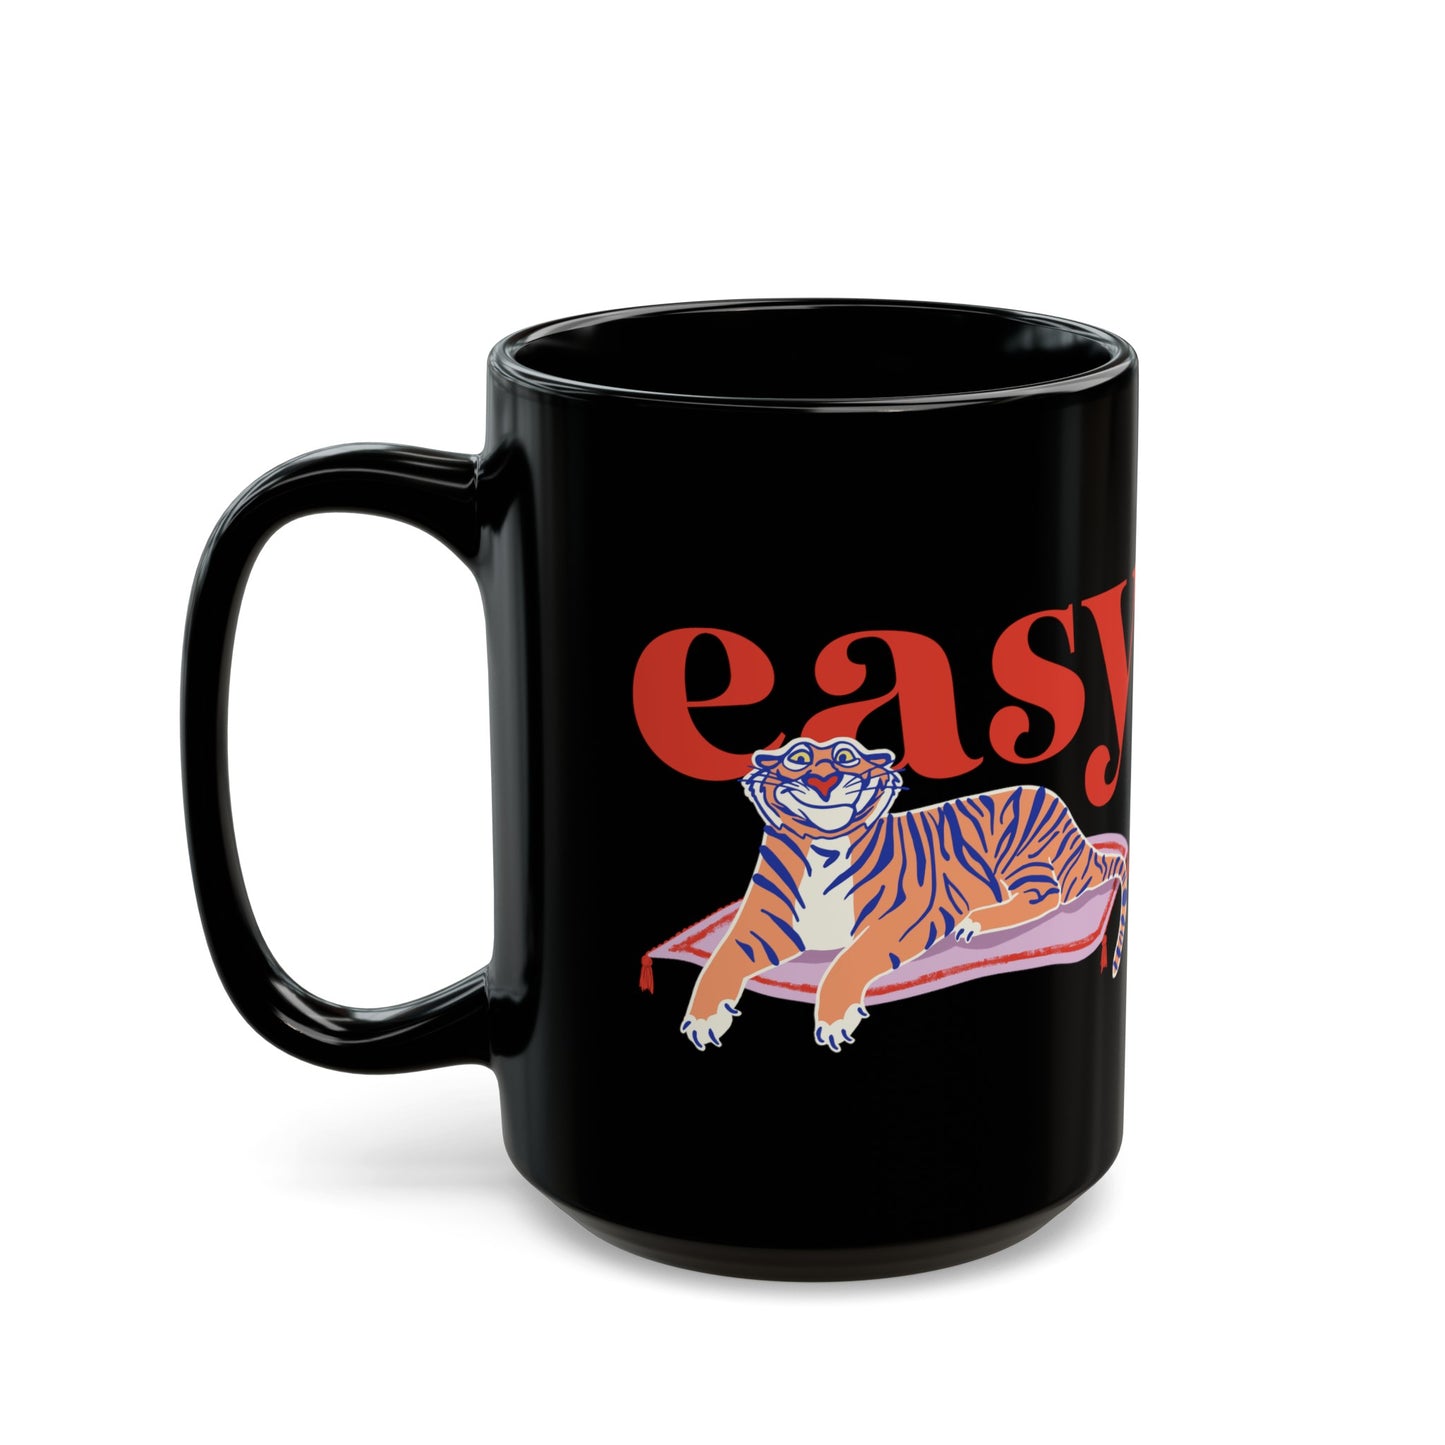 Easy Tiger - Rajah - Black Mug